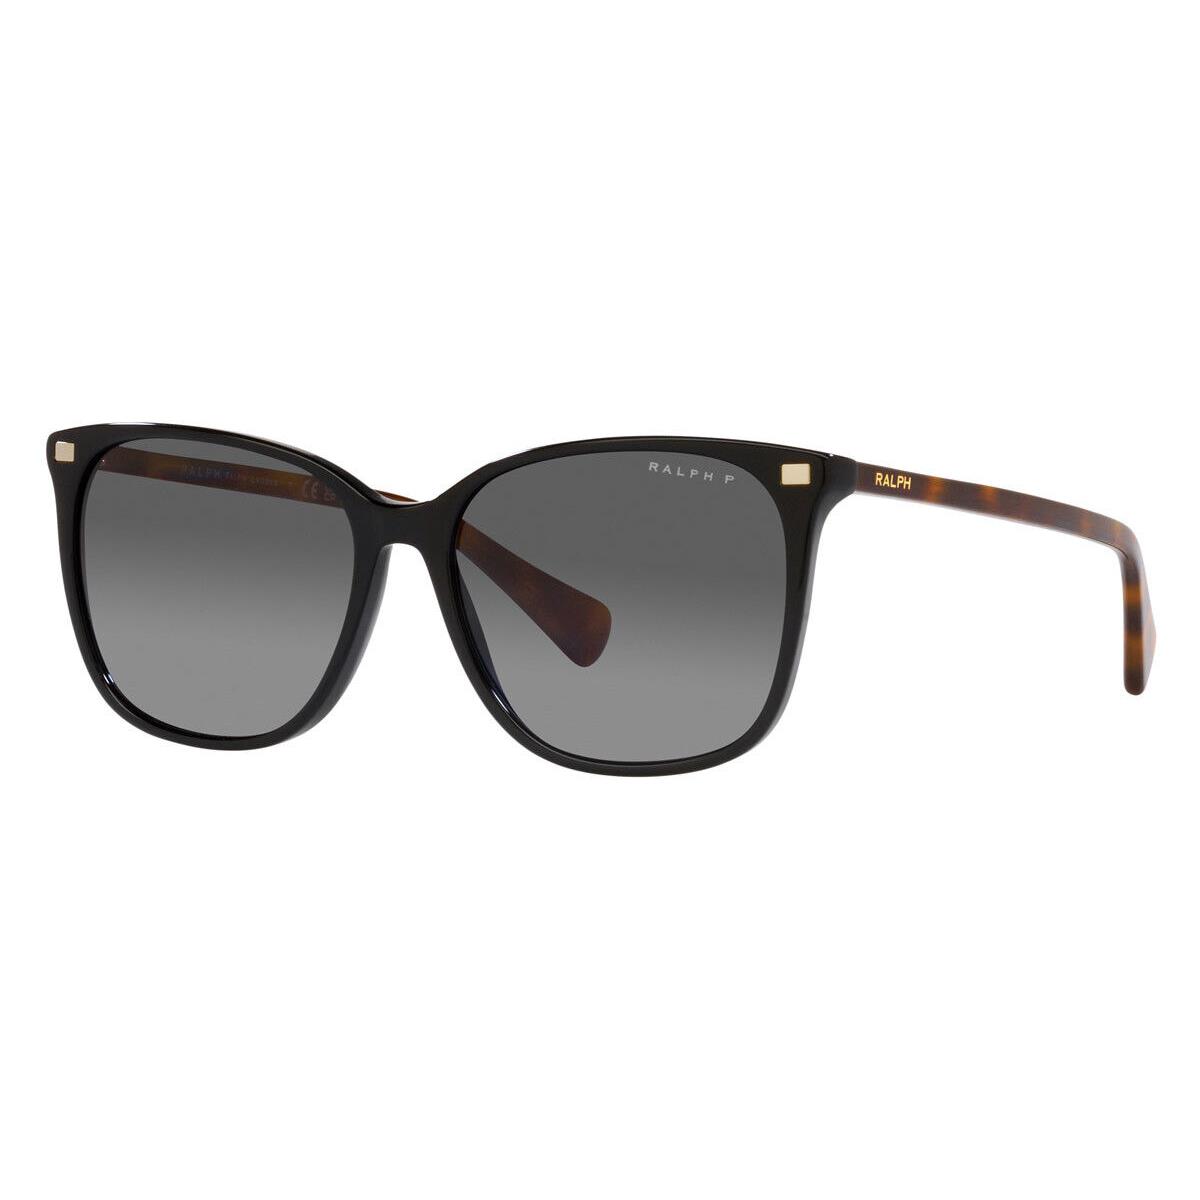 Ralph Lauren Vvcv RA5293 Sunglasses Shiny Black Polarized Gradient Brown 56mm